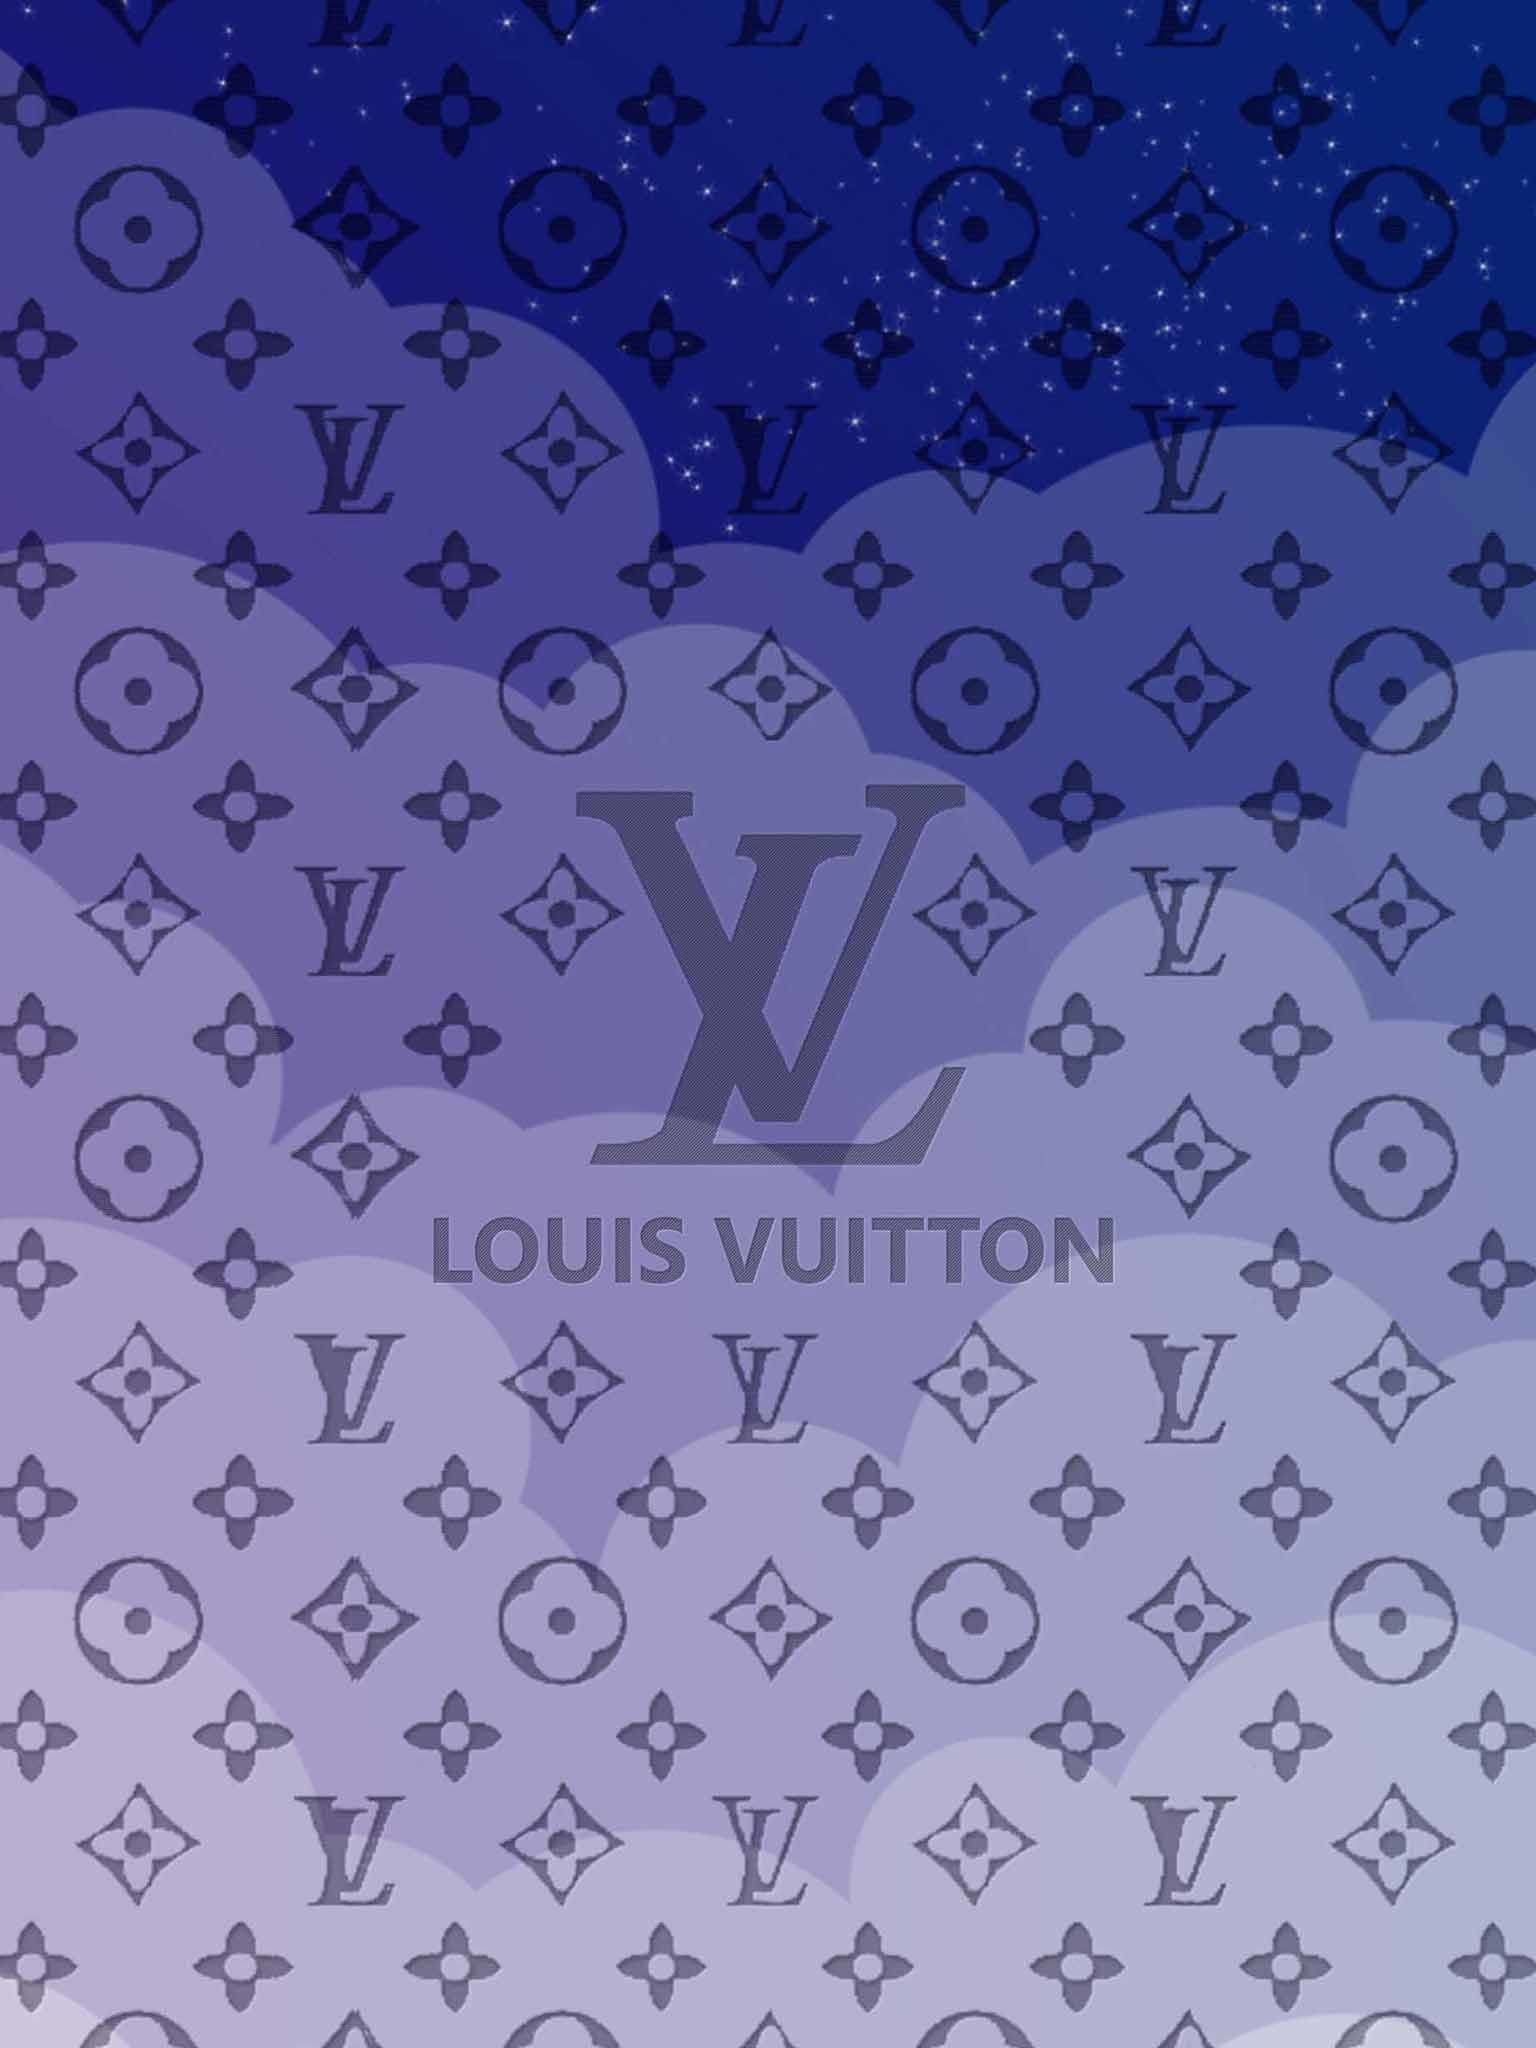 Louis Vuitton Wallpaper for iPhone  Louis vuitton background, Louis  vuitton iphone wallpaper, Gucci wallpaper iphone